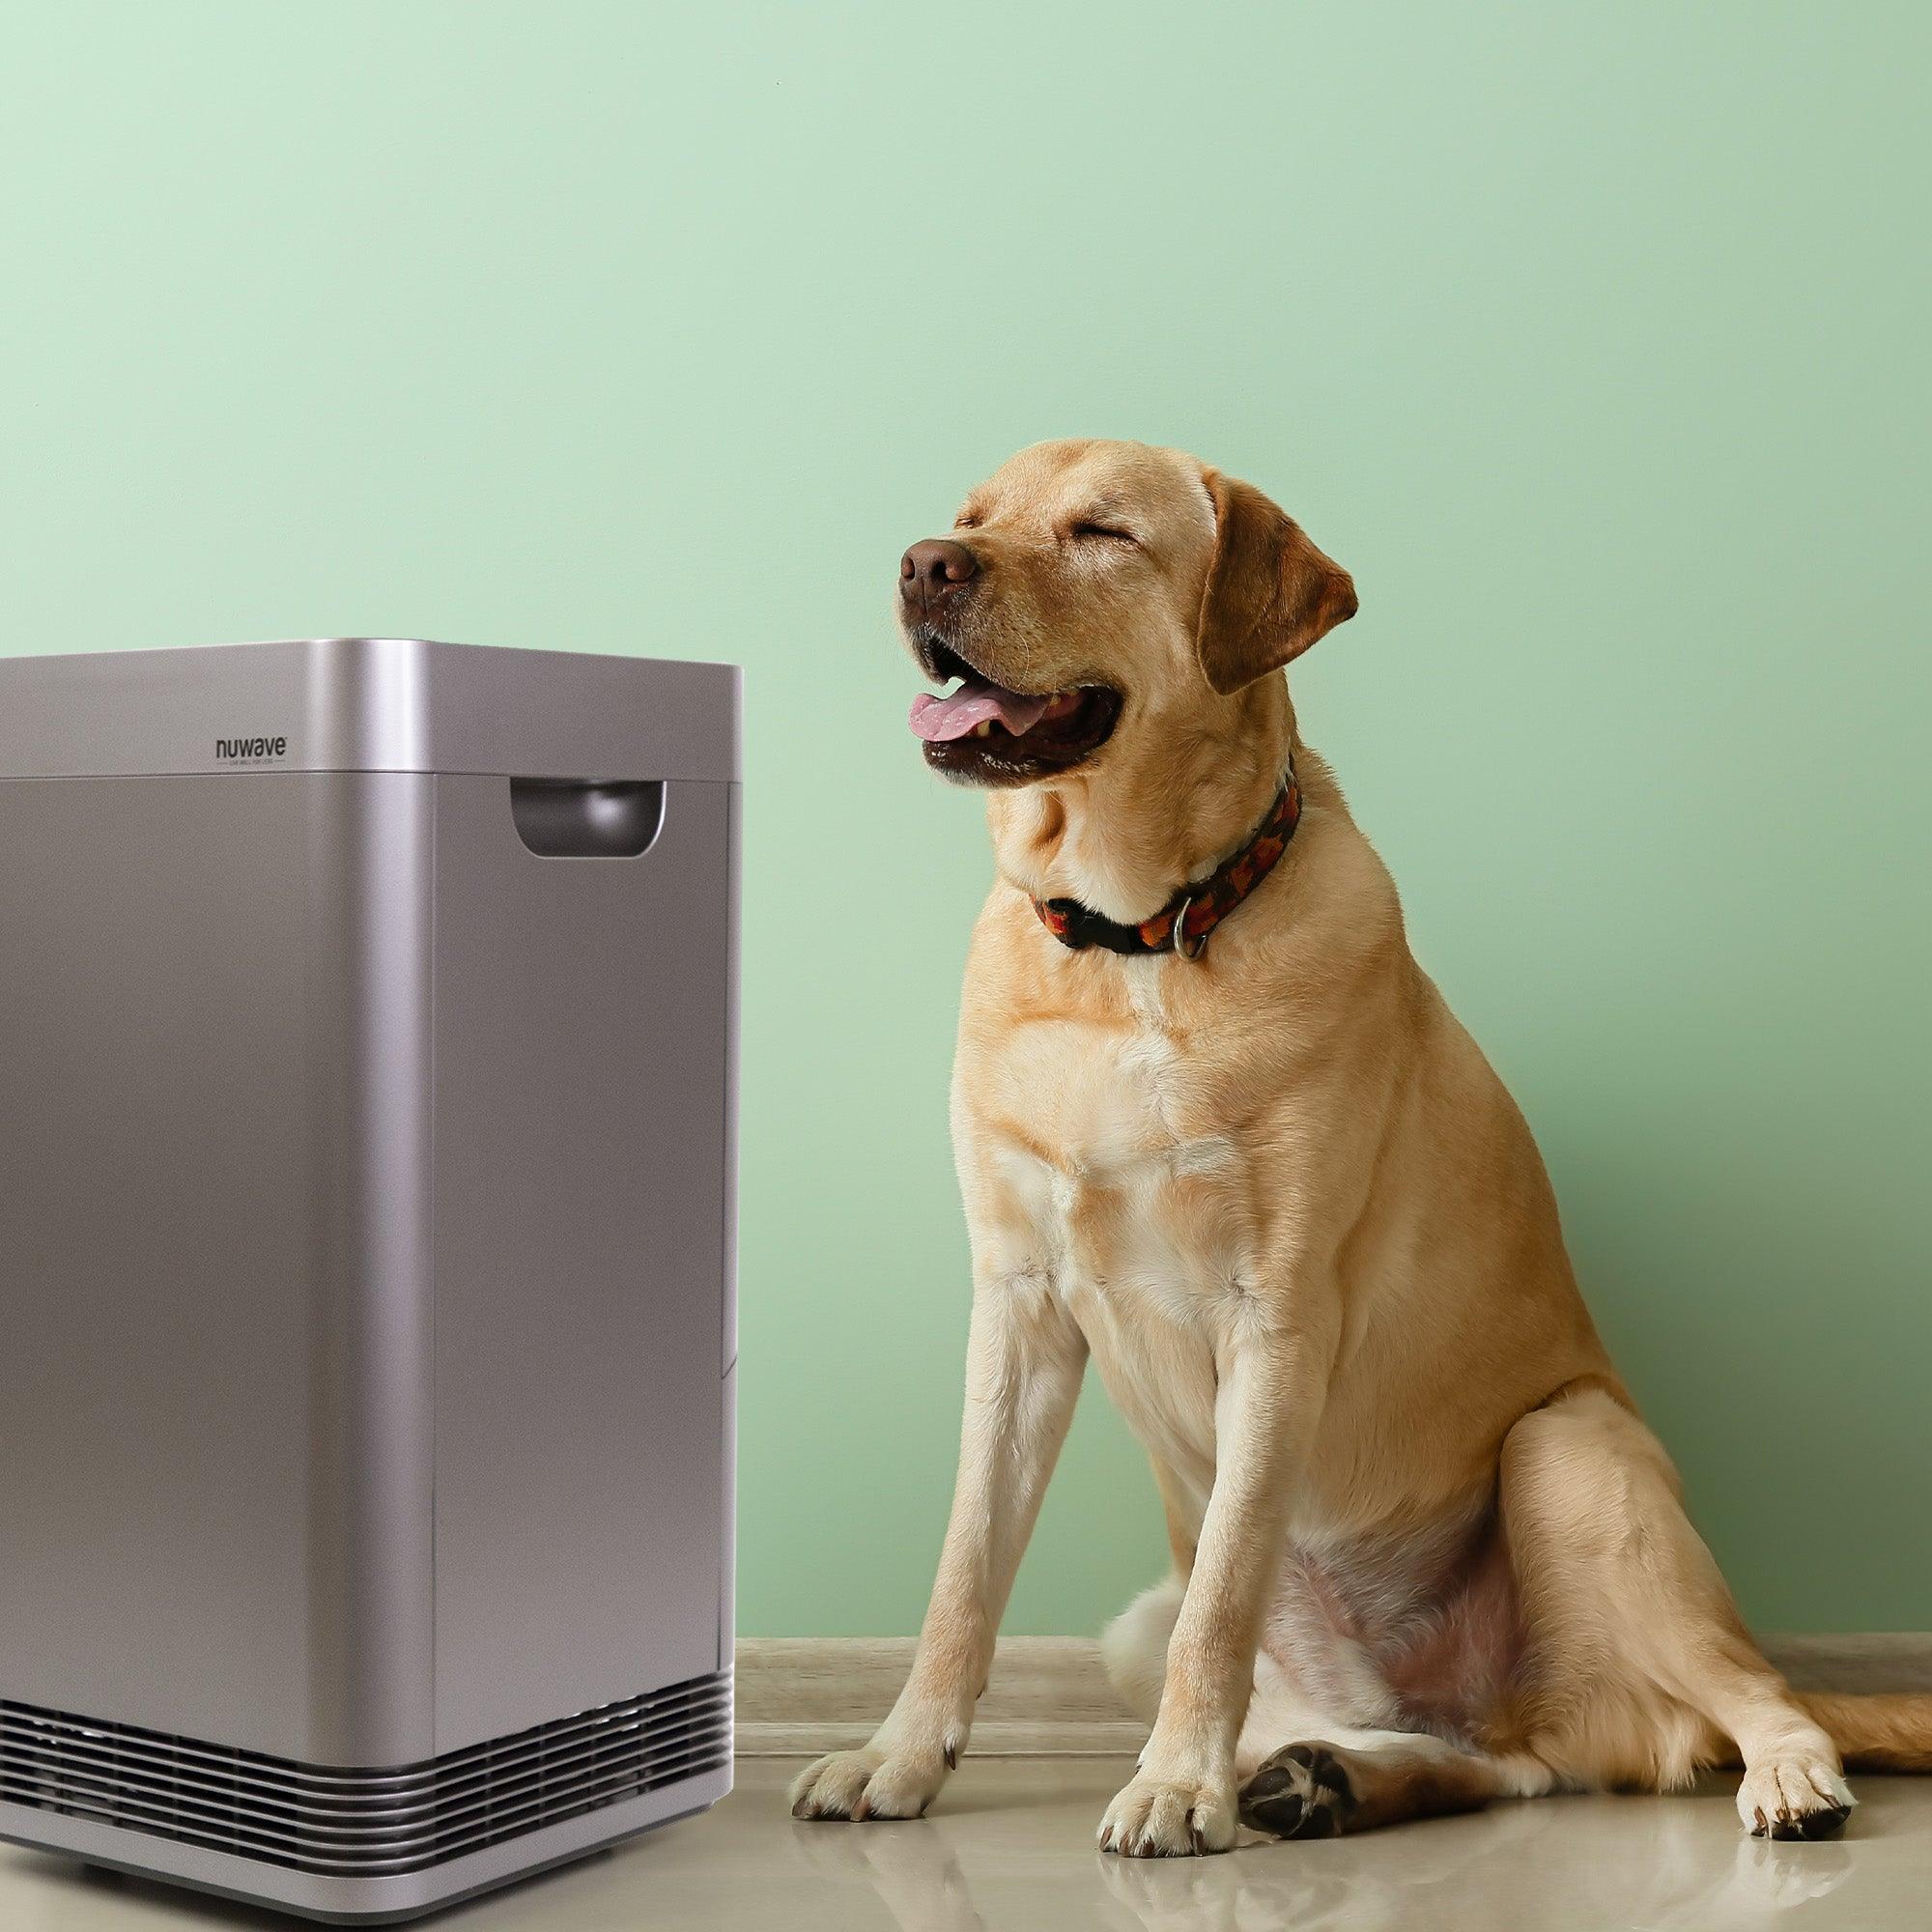 Happy Dog Enjoying Clean Air with NuWave Air Purifier